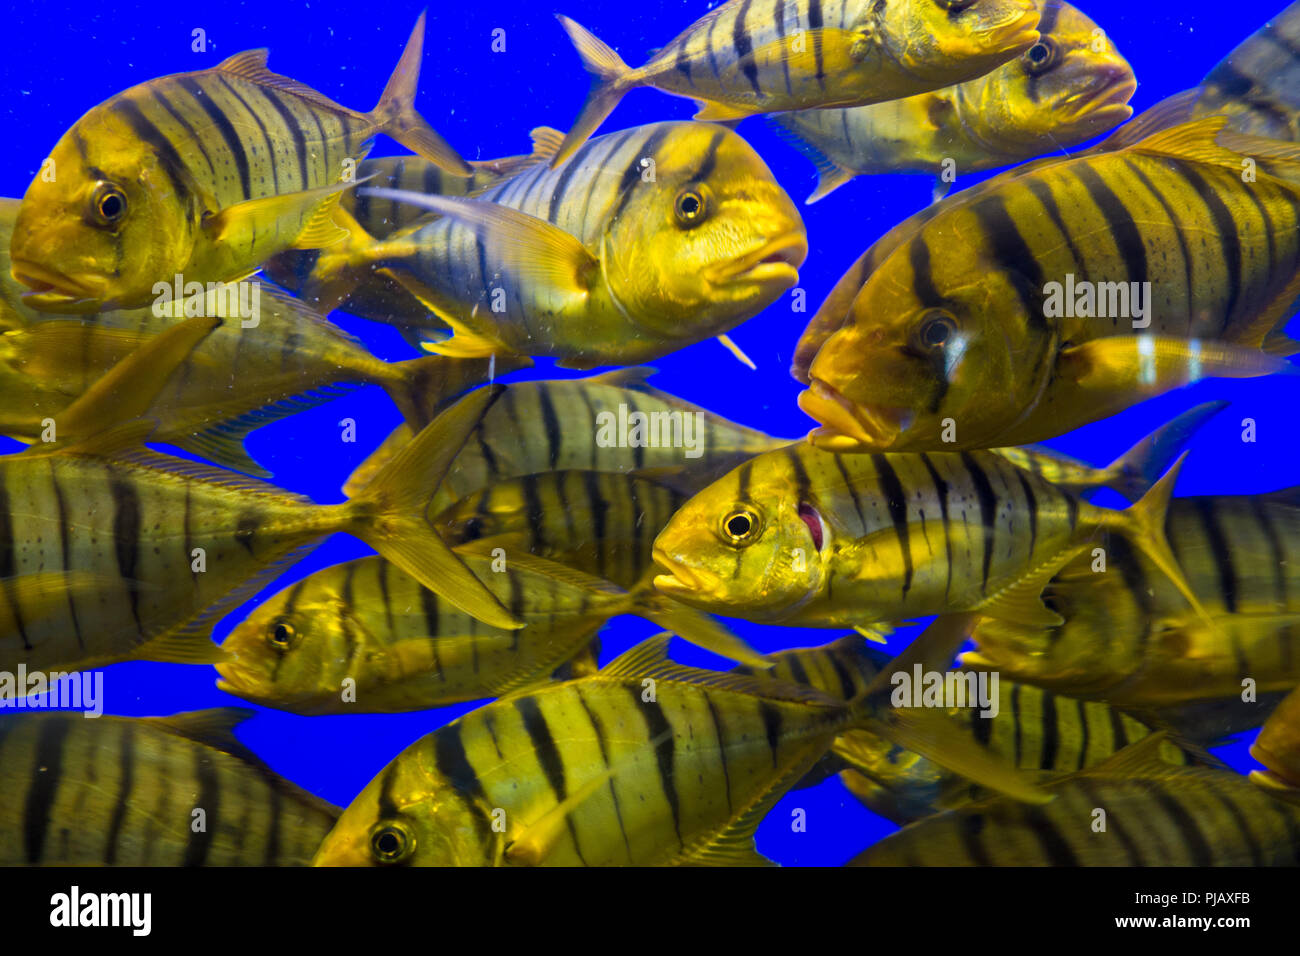 Bright tropical fish in an aquarium display at Seaworld theme park in Orlando, Florida, USA Stock Photo